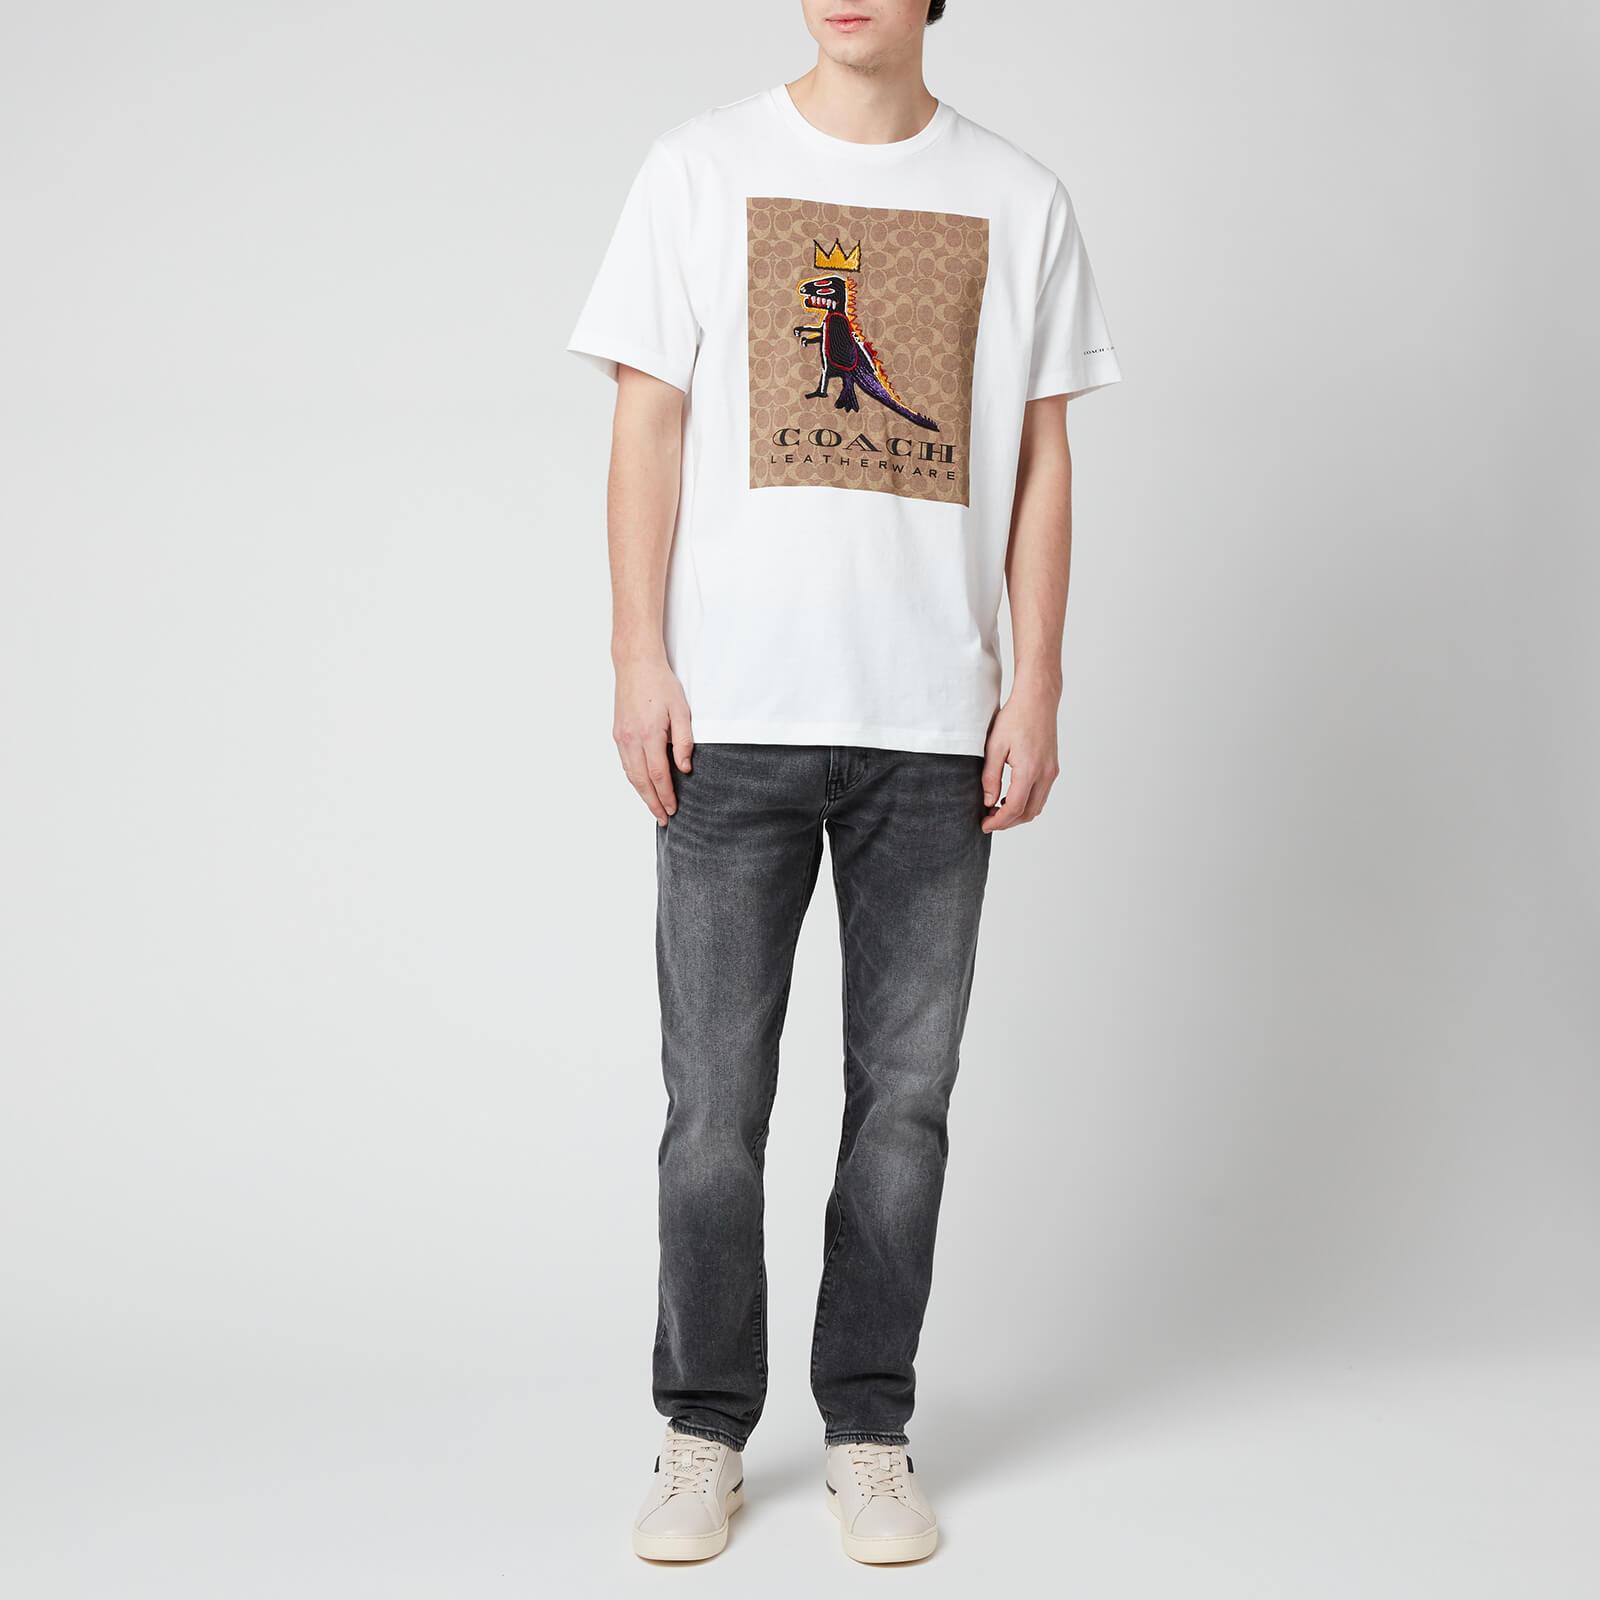 COACH X Jean-michel Basquiat T-shirt in White for Men | Lyst